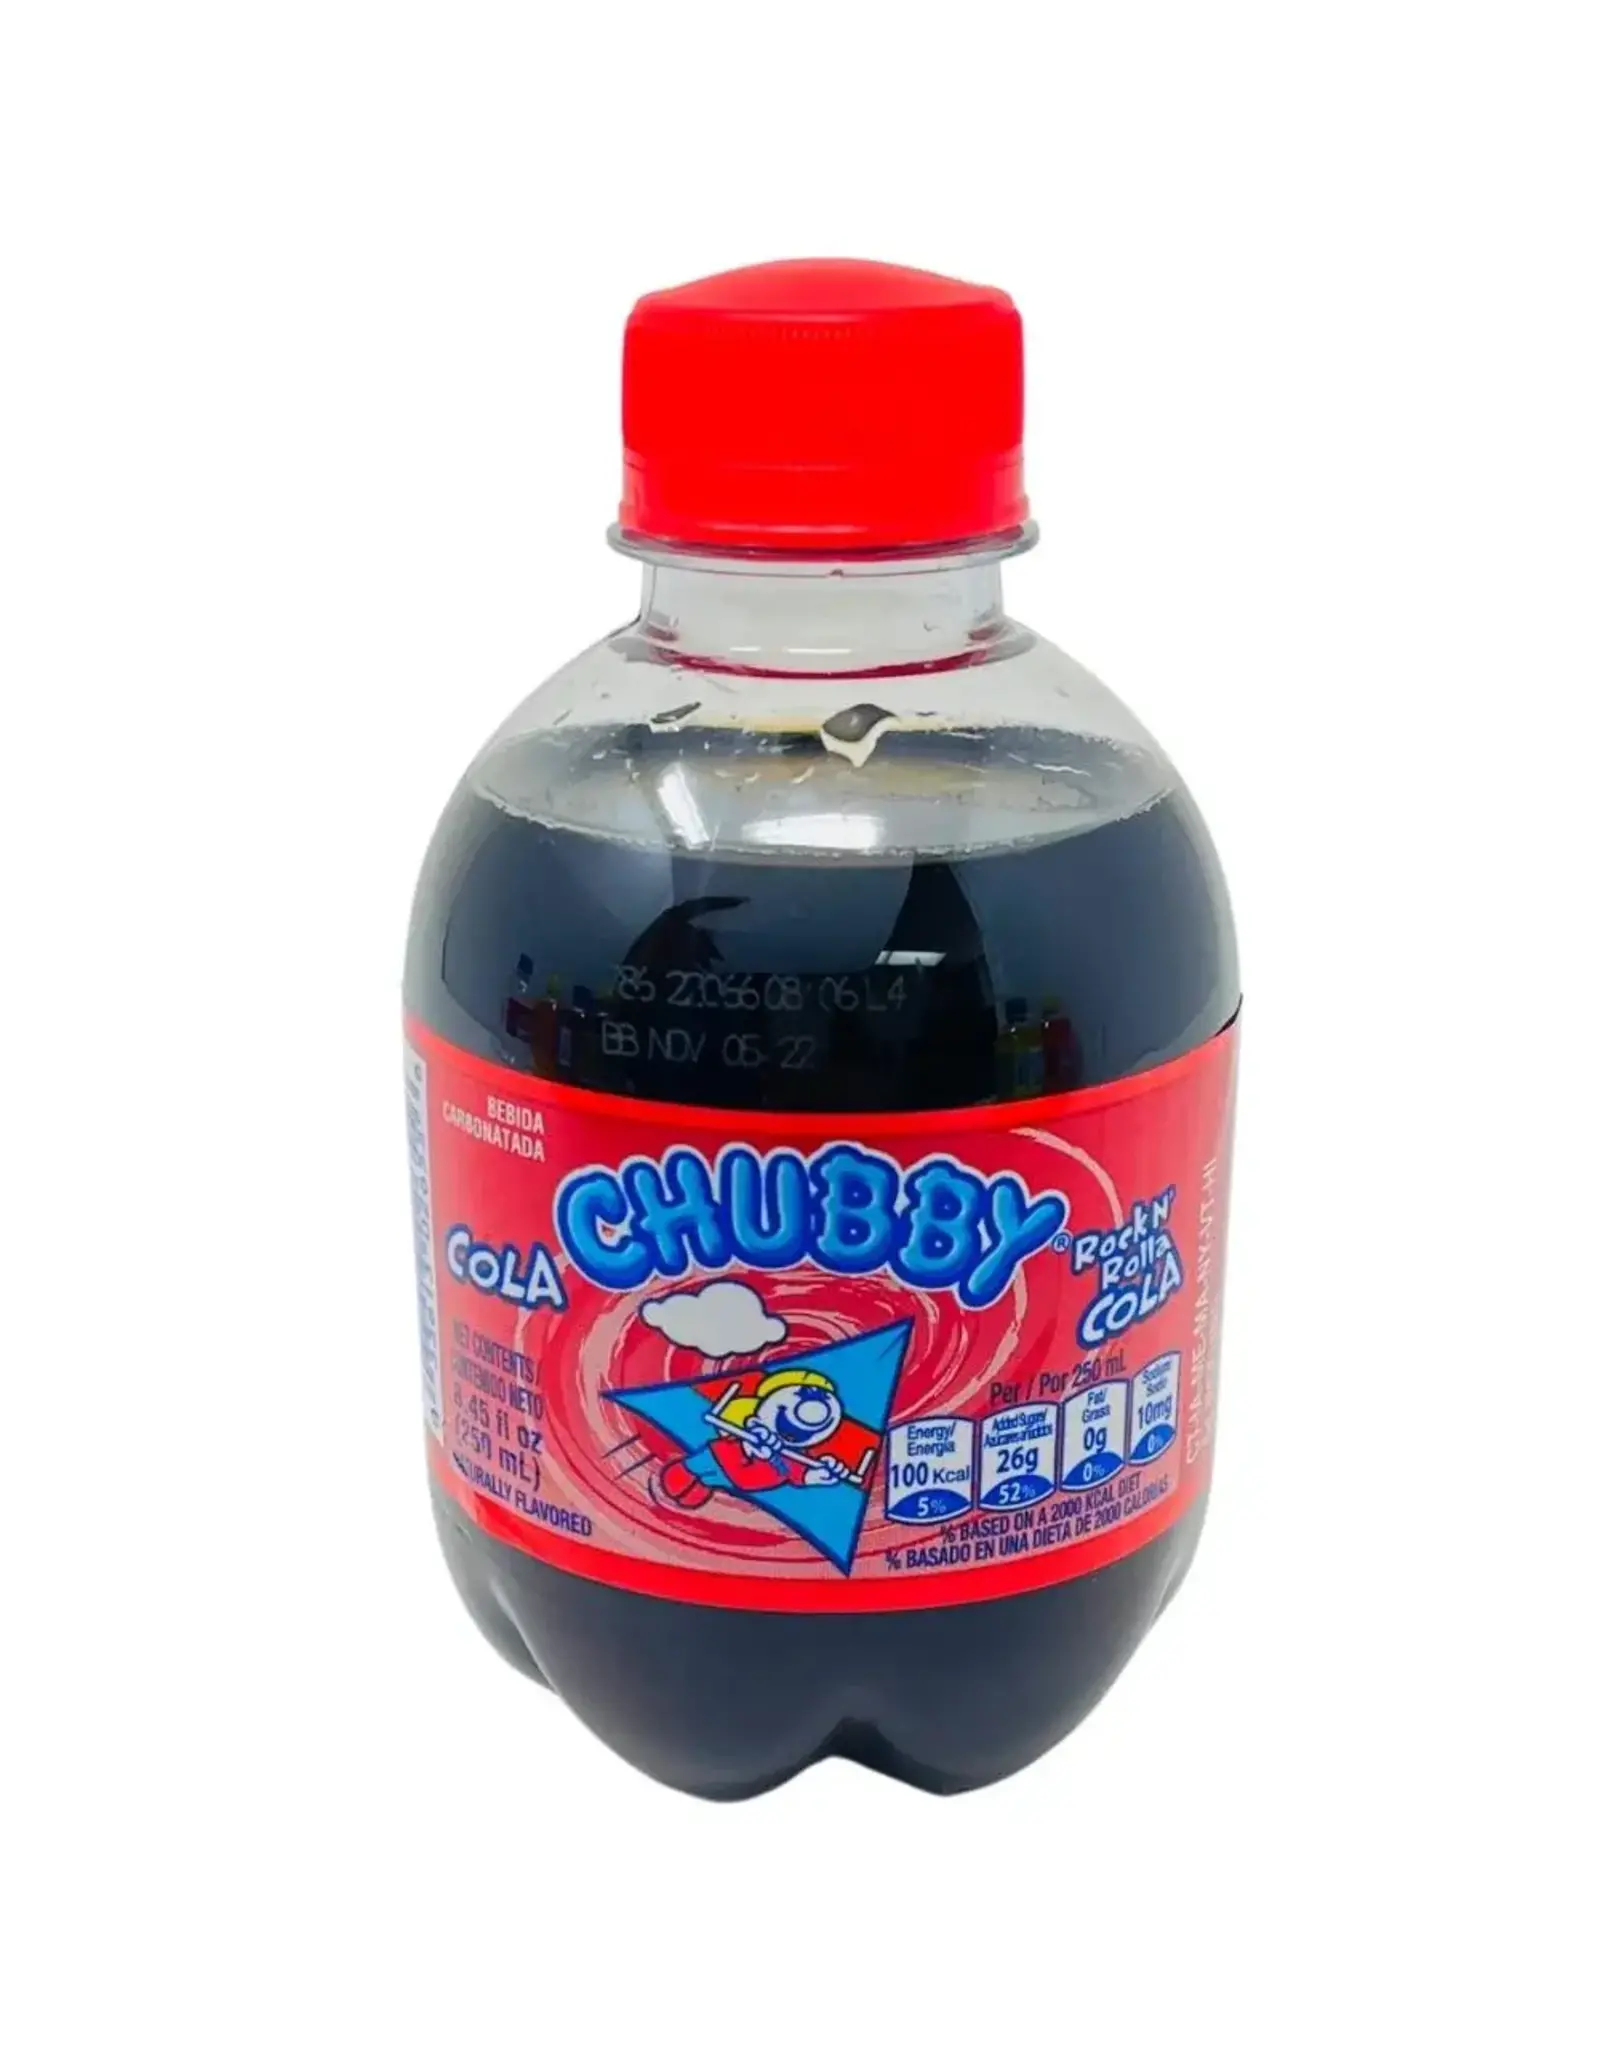 Chubby Rock N' Rolla Cola Soda